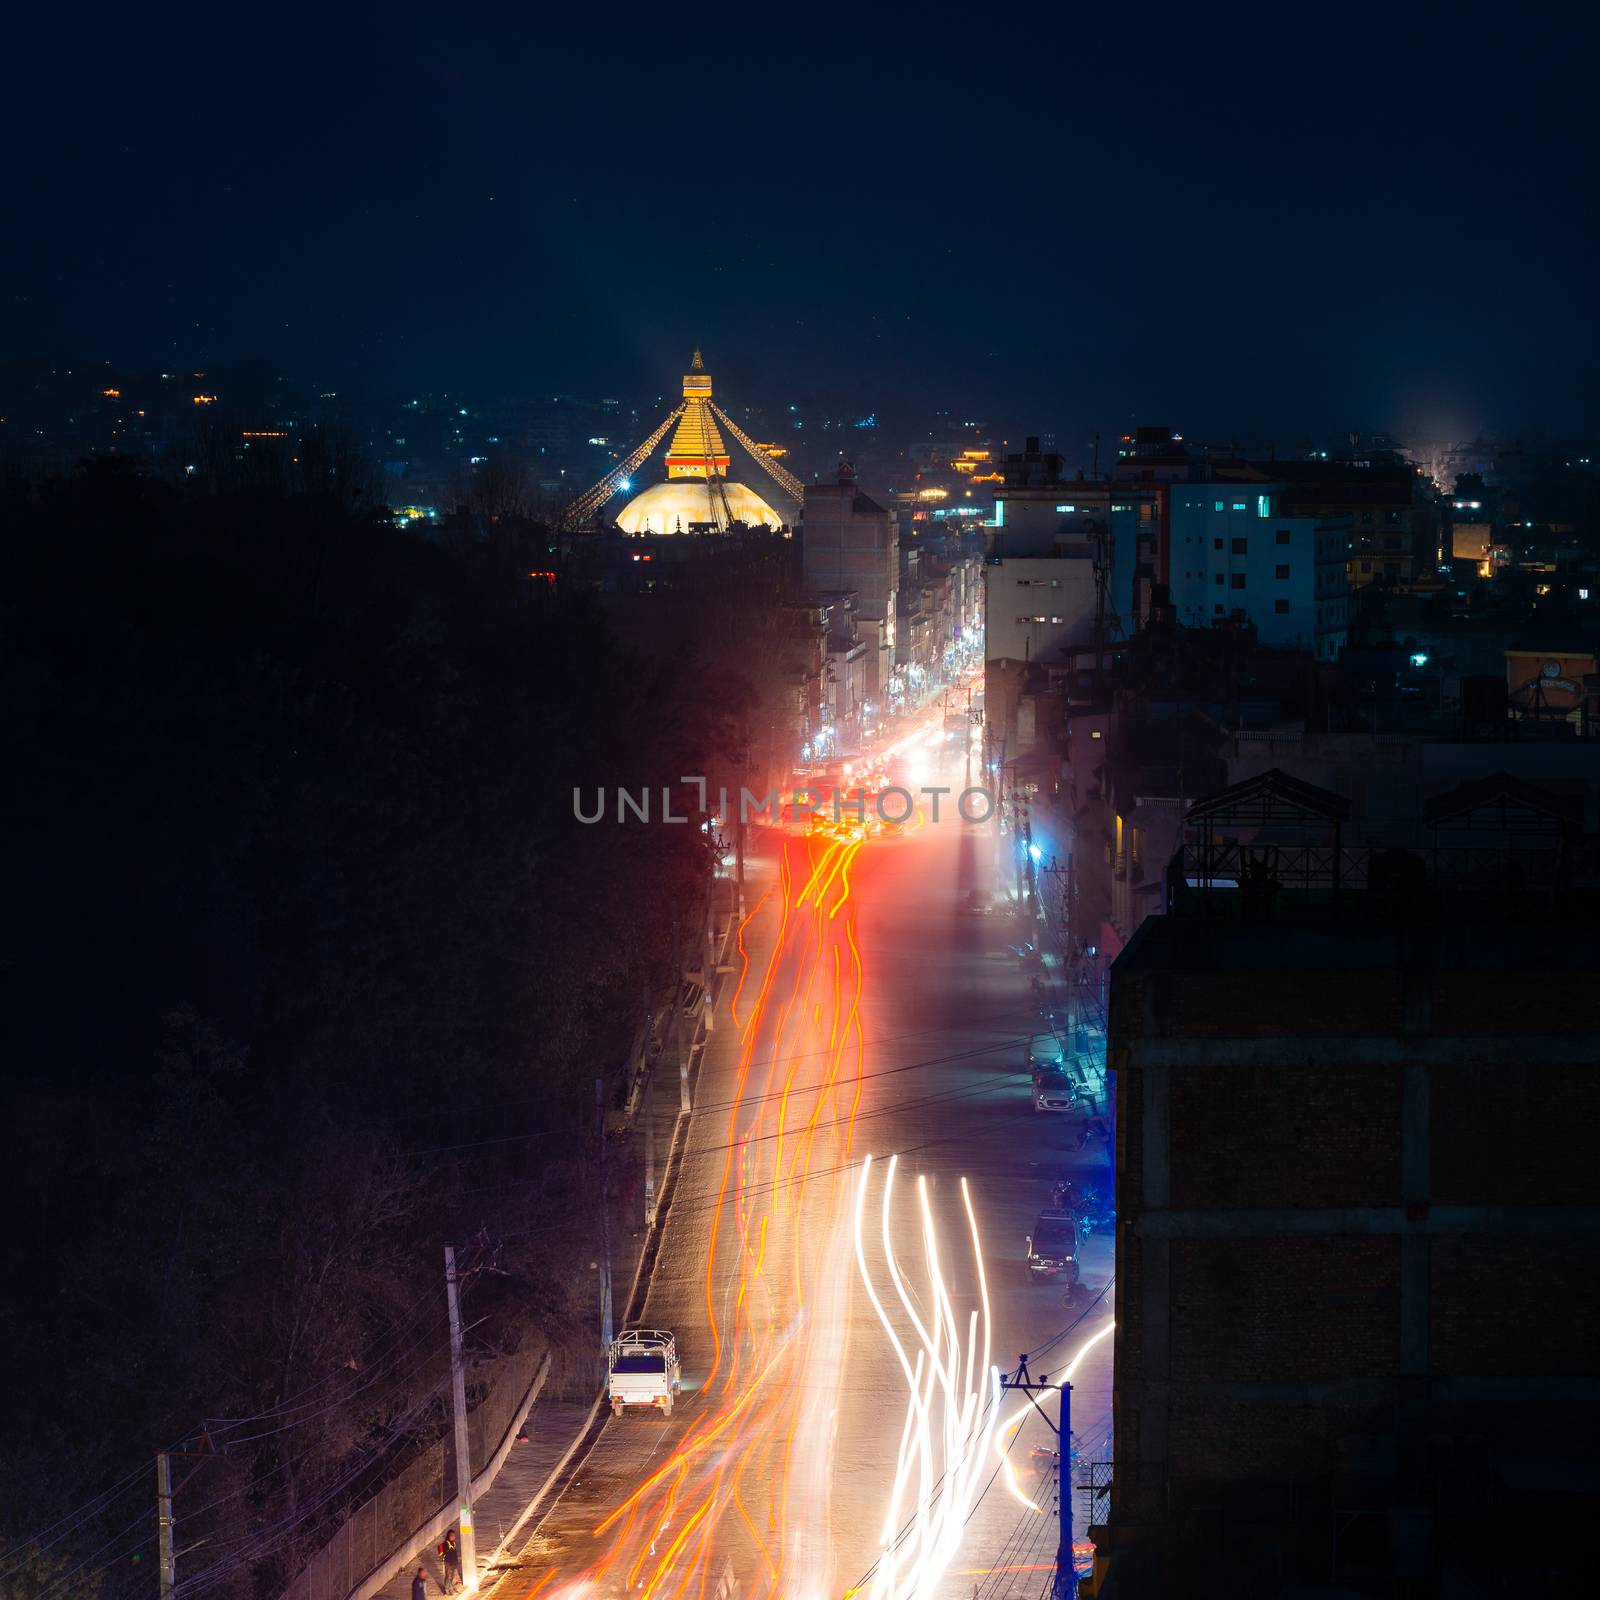 Boudhanath stupa at night, Nepal by dutourdumonde